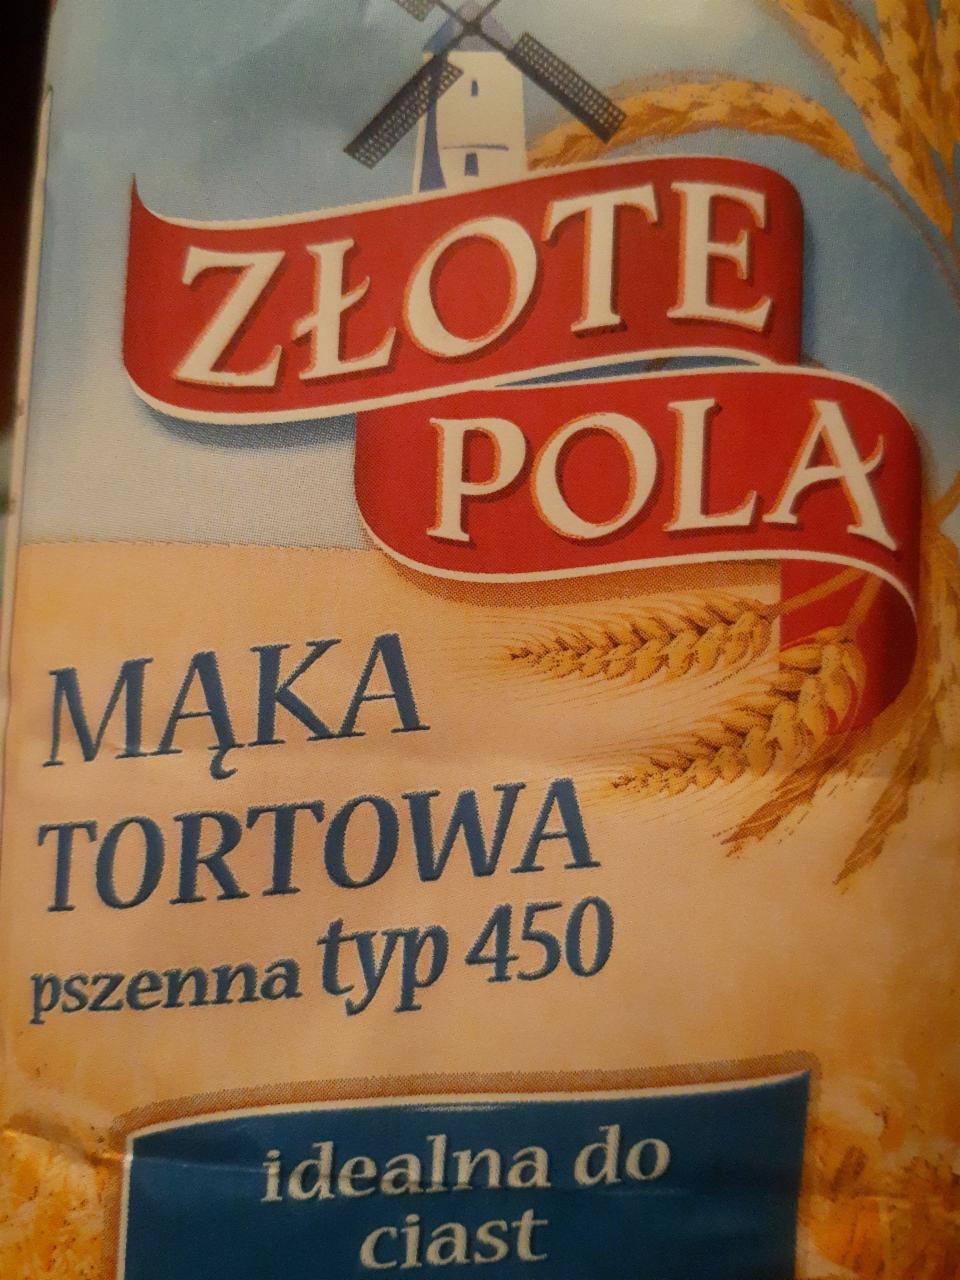 Фото - Борошно пшеничне Maka Tortowa Zlote Pola